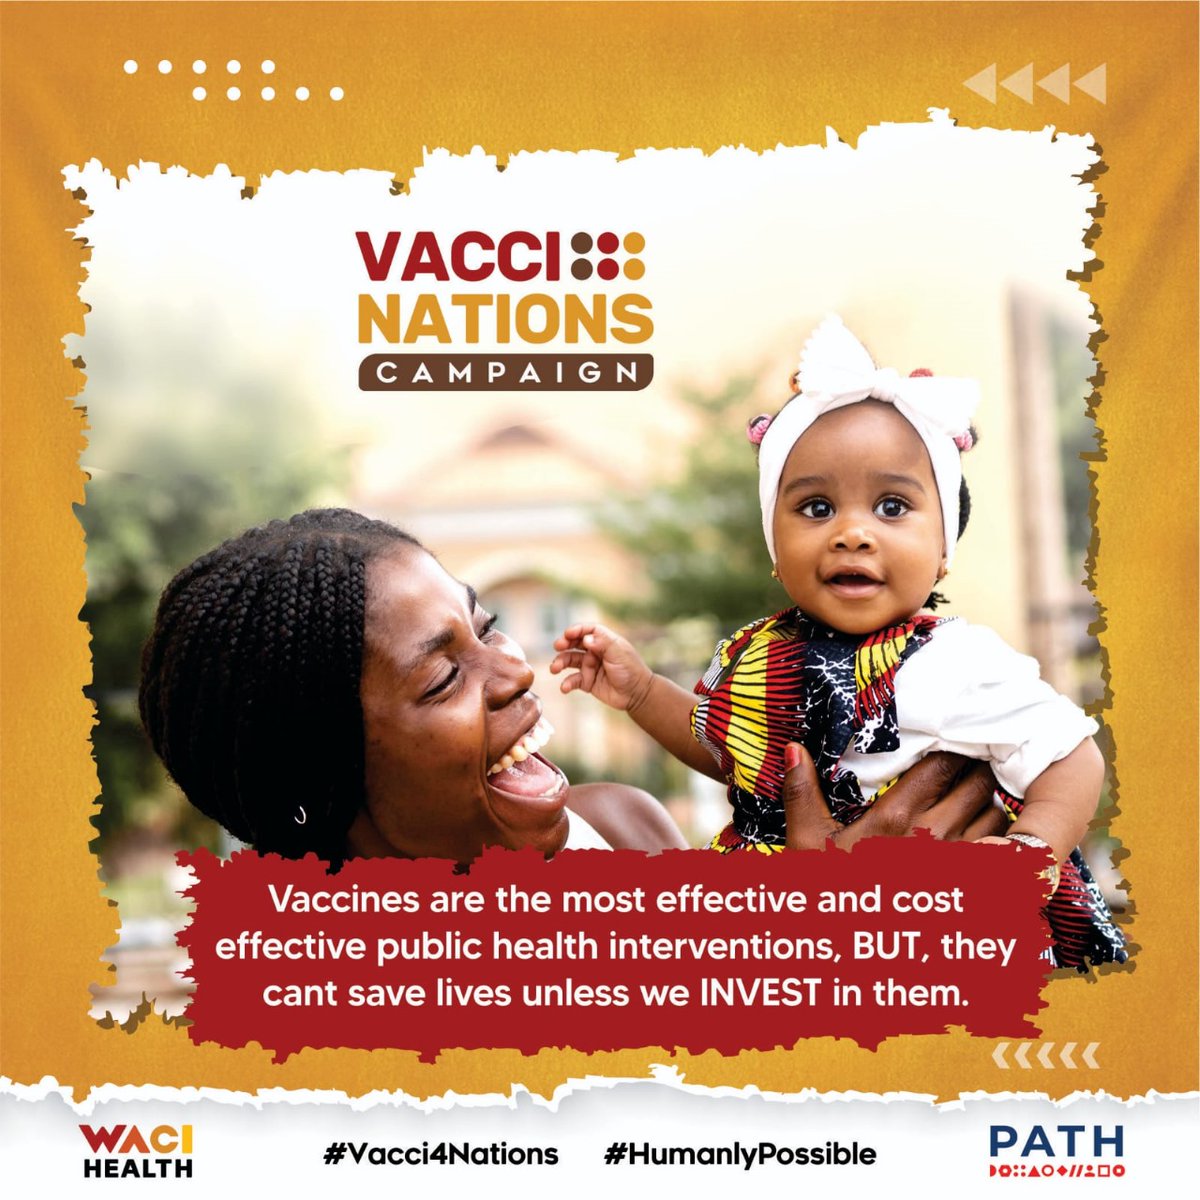 @path @PATHadvocacy @gavi @MTotoNews @WACIHealth @Gloriamululu @WanjikuMerci @QueerSpacKe @ItsKyuleNgao @SaraKe_biya @its_qario @mariahakinyi11 @Shis1Shisia From community engagement to government support, effective immunization financing requires a multi-sectoral approach. @gavi_csos @PATH @PATHadvocacy @WACIHealth @gavi @MTotoNews #Vacci4Nations #HumanlyPossible #WorldImmunizationWeek